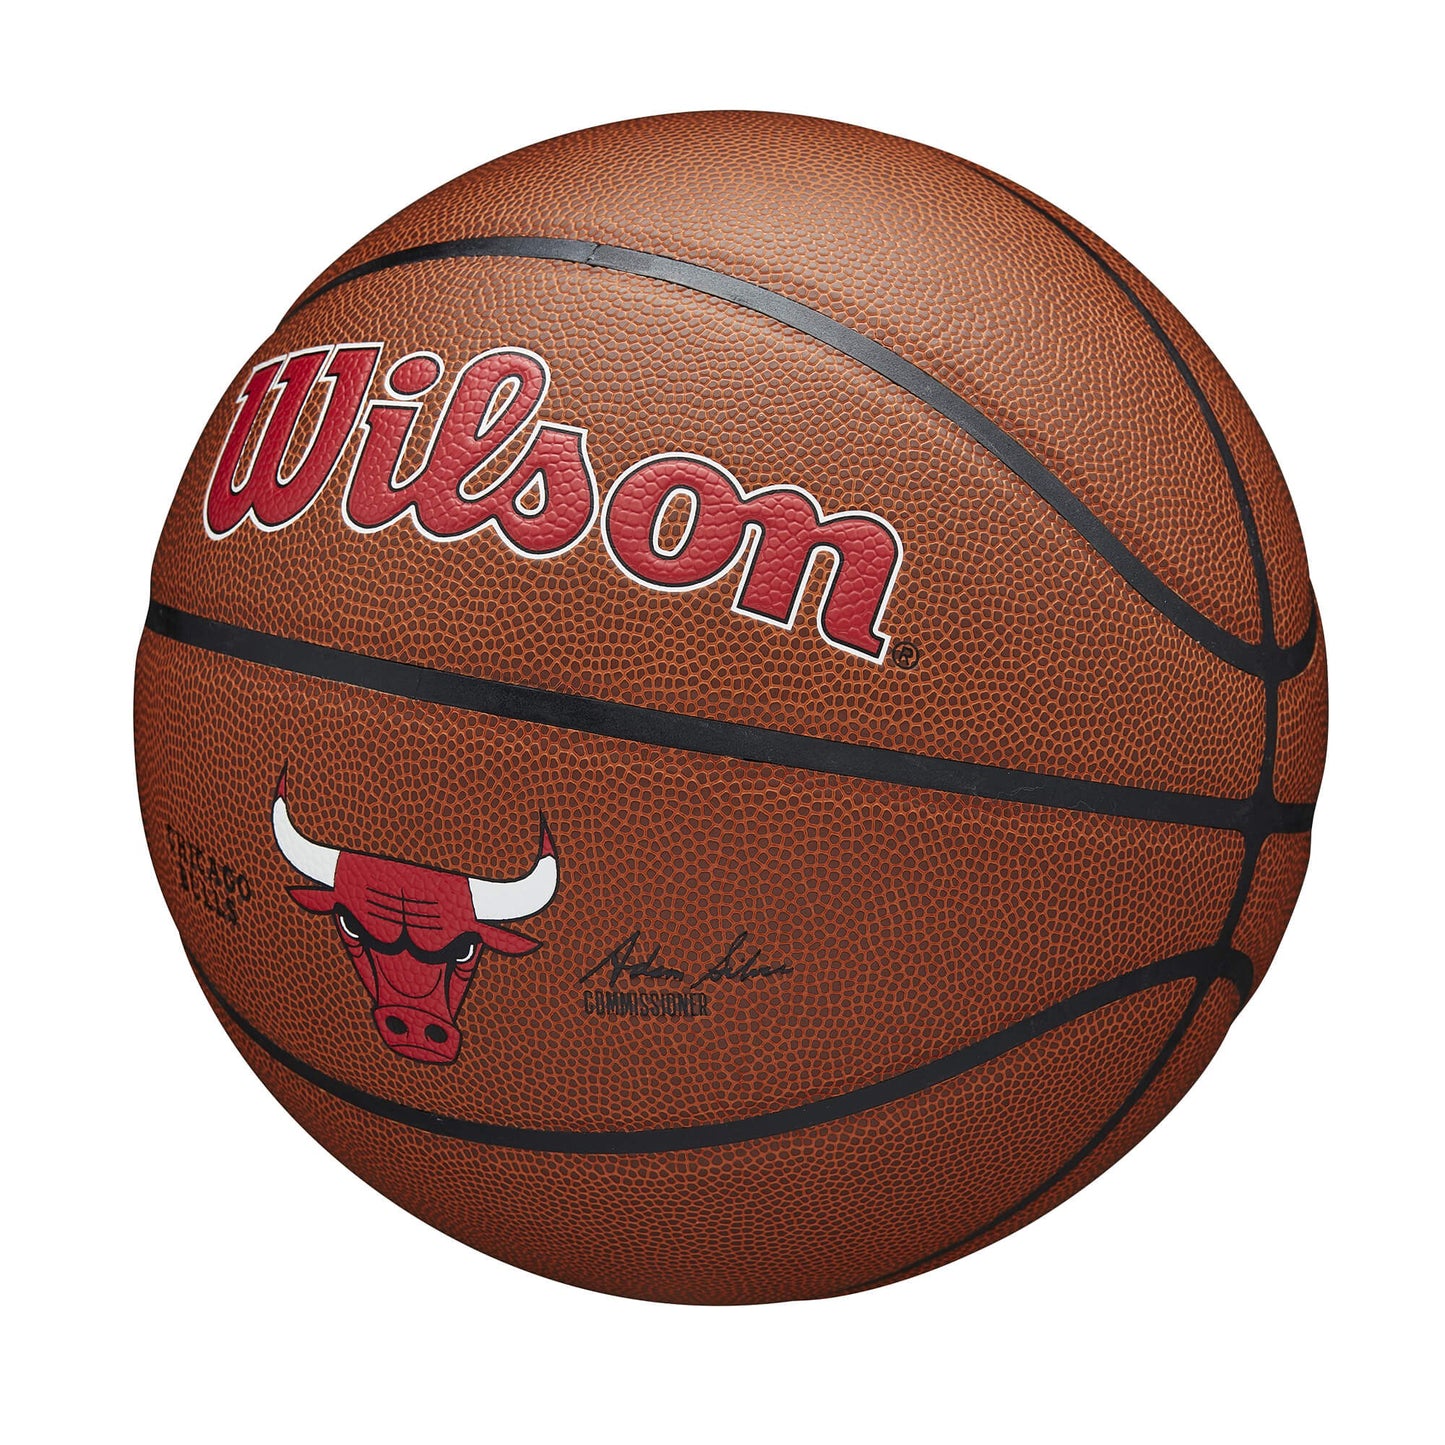 Wilson NBA Team Alliance Composite Basketball Chicago Bulls (sz. 7)